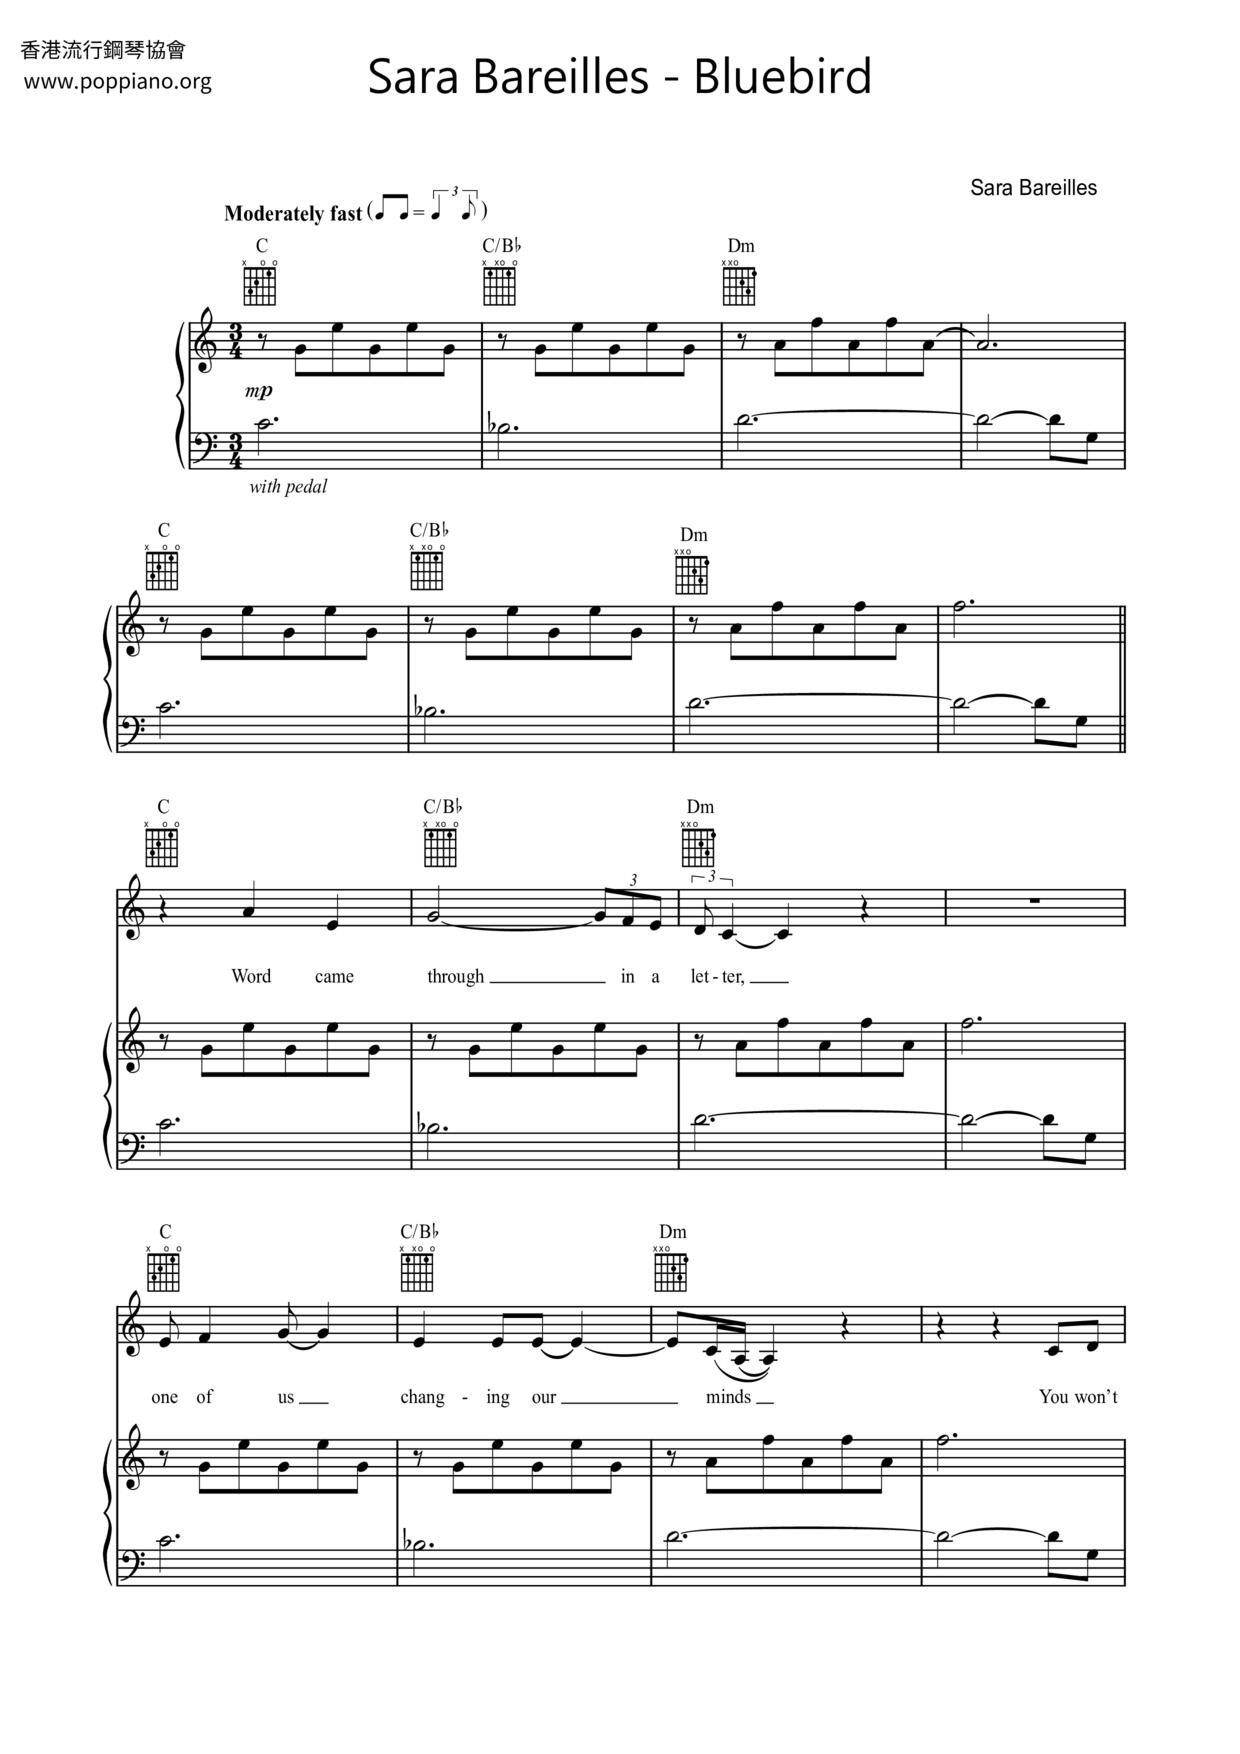 Bluebird Score